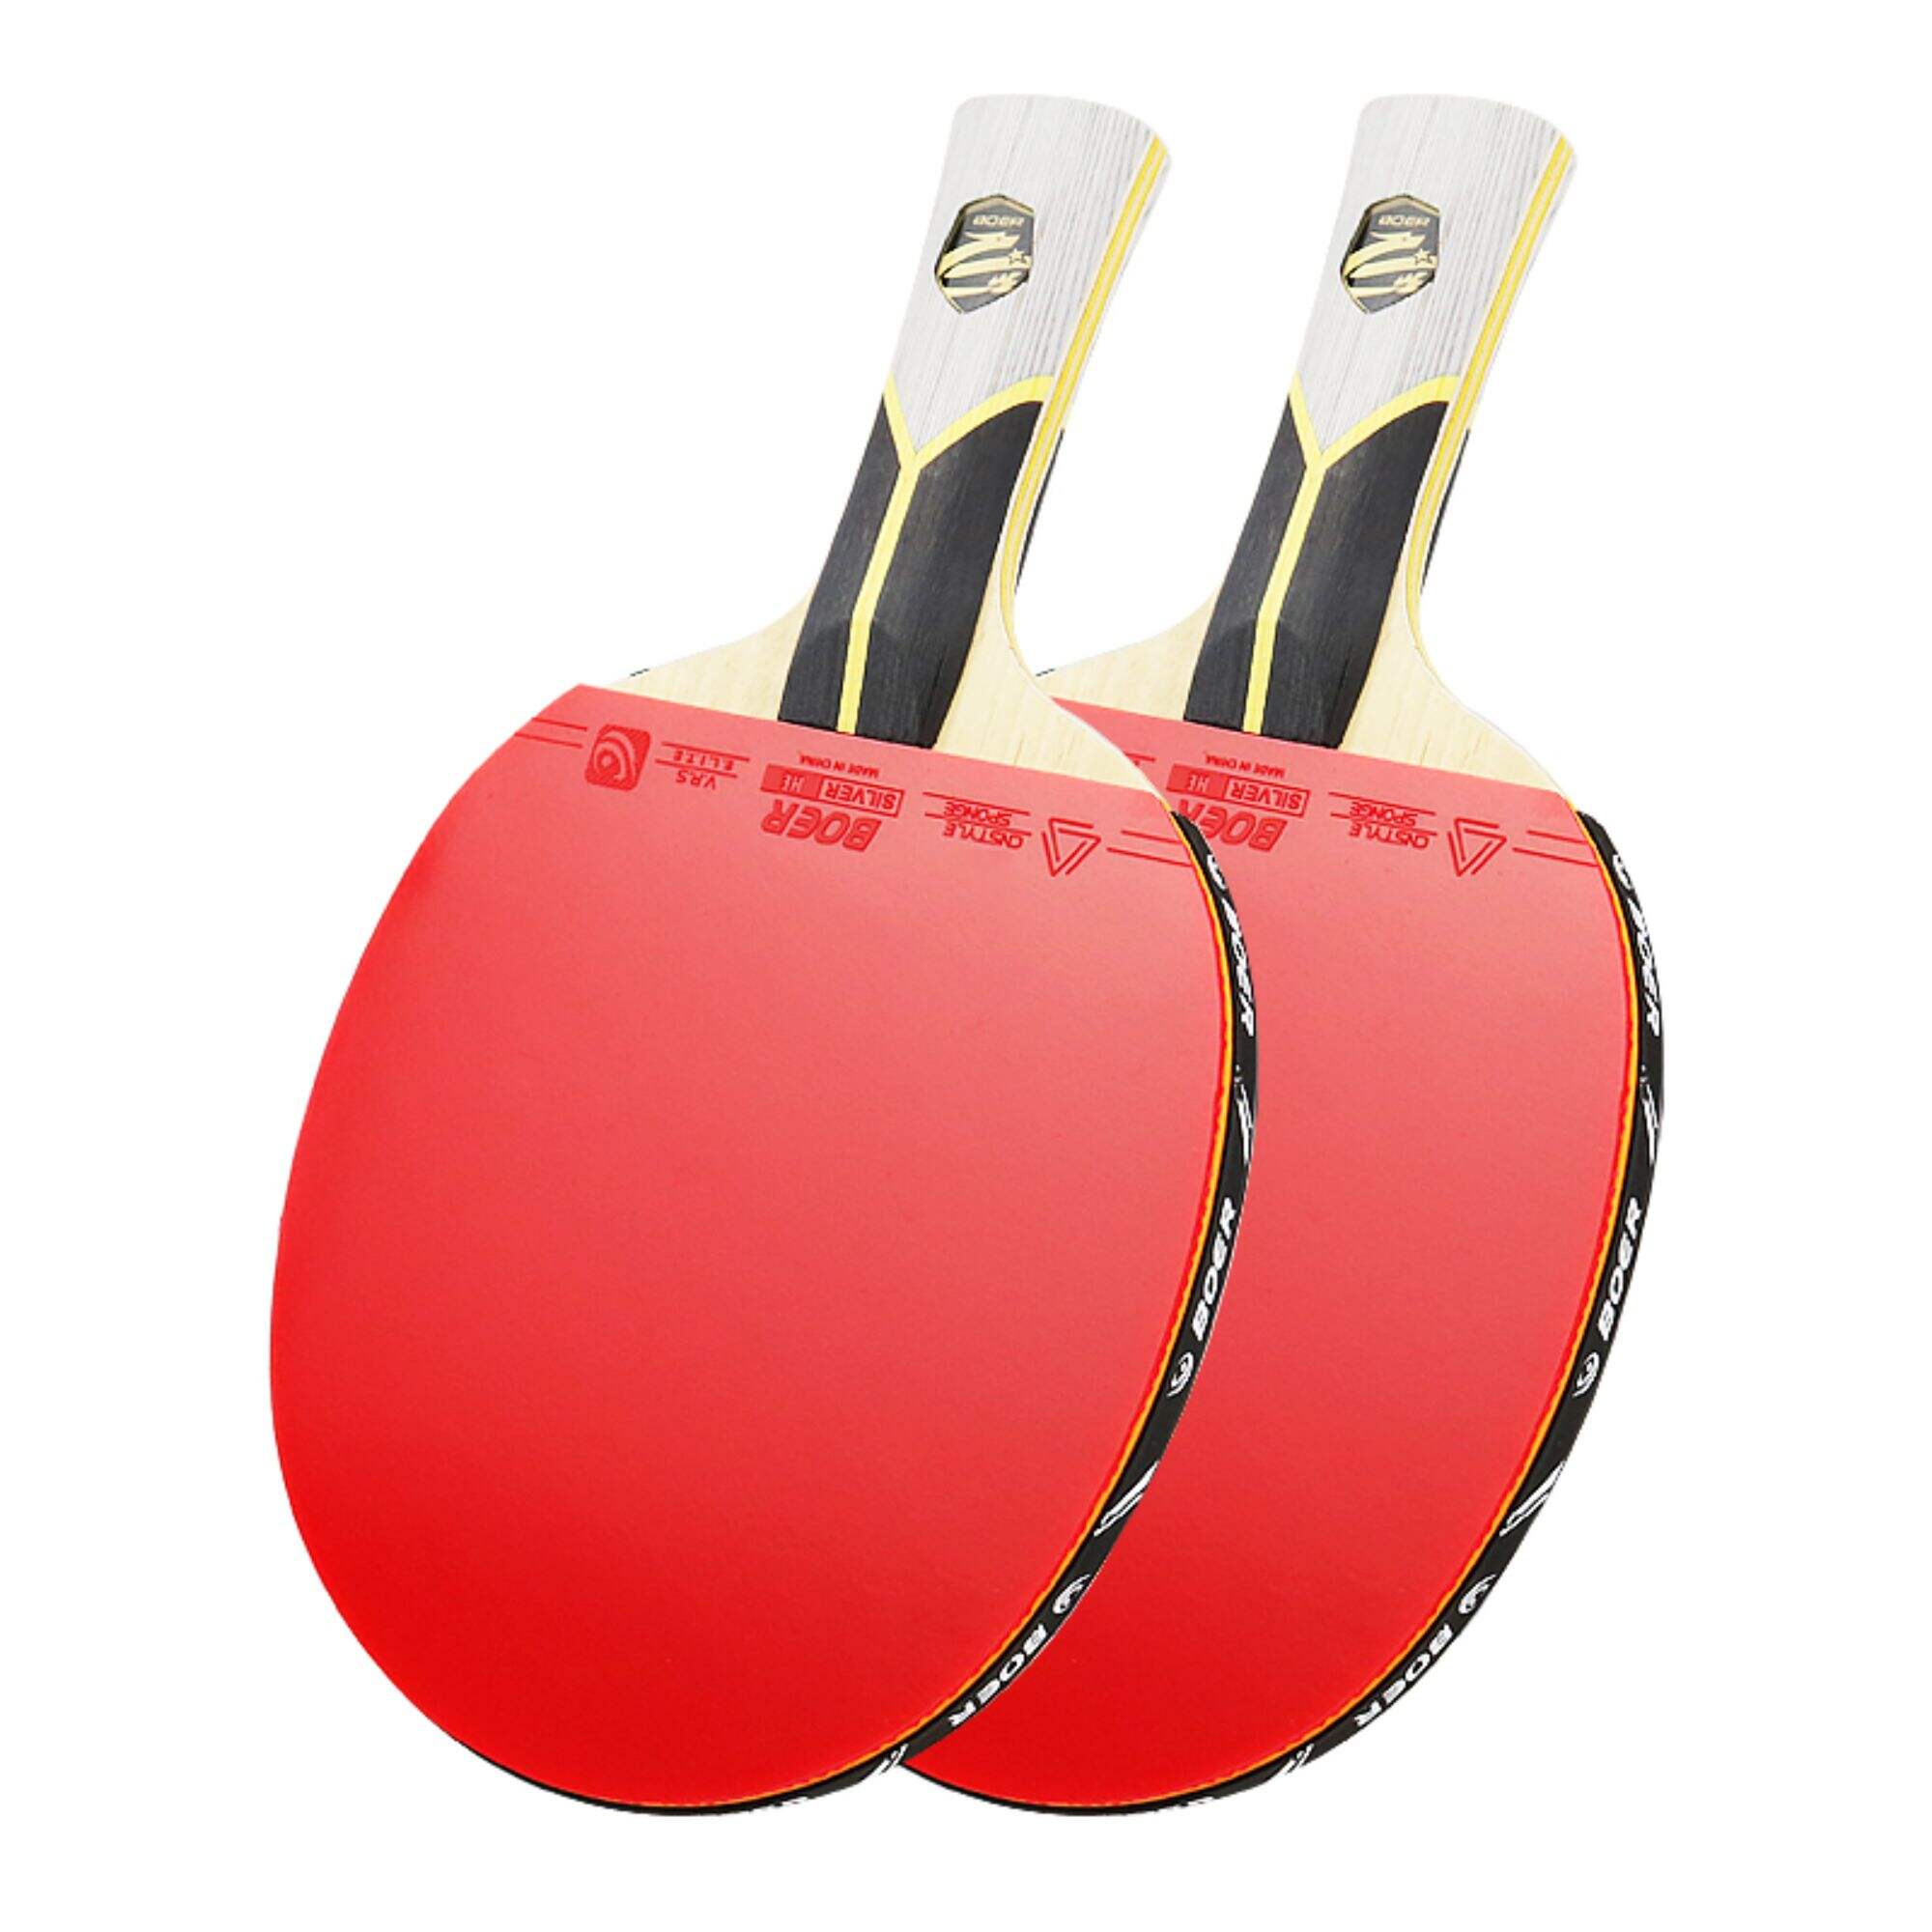 Boer S8 Series High-grade 9 Ply Table Tennis Rakcet/Bat/Paddle